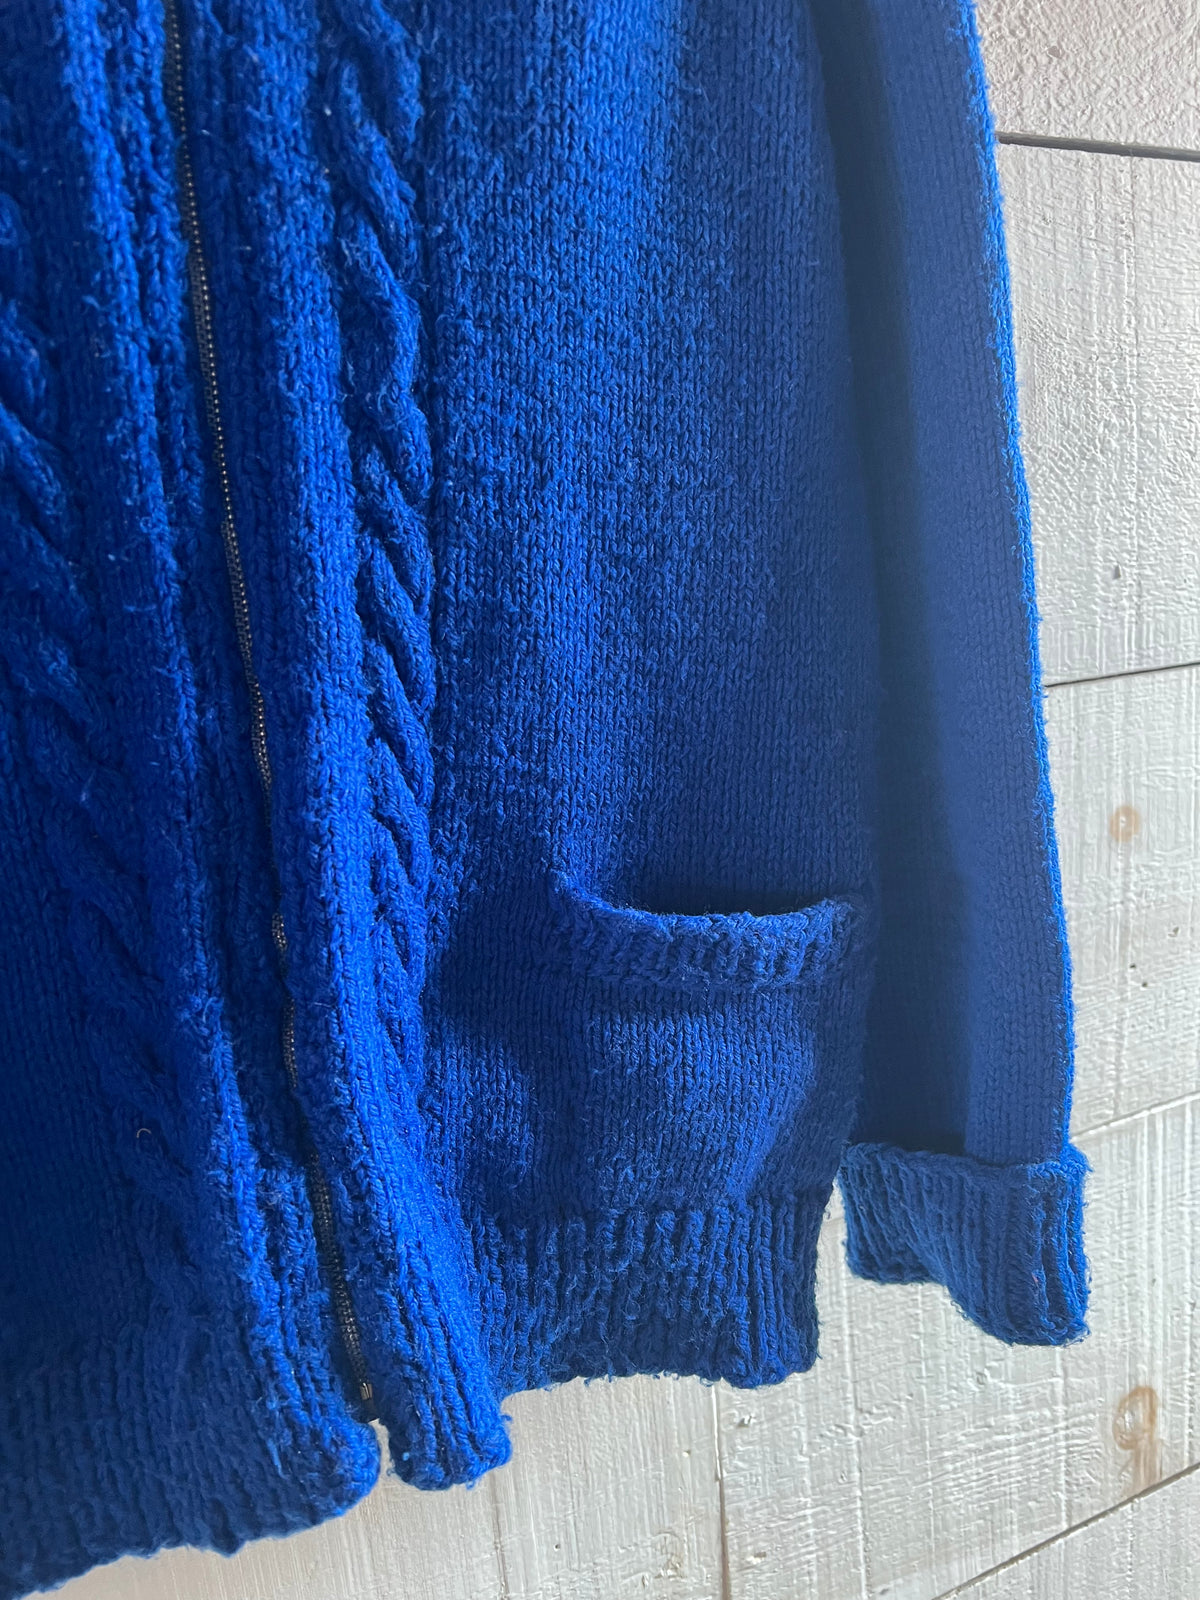 Vintage Hand Knit Cardigan Sweater - Blue